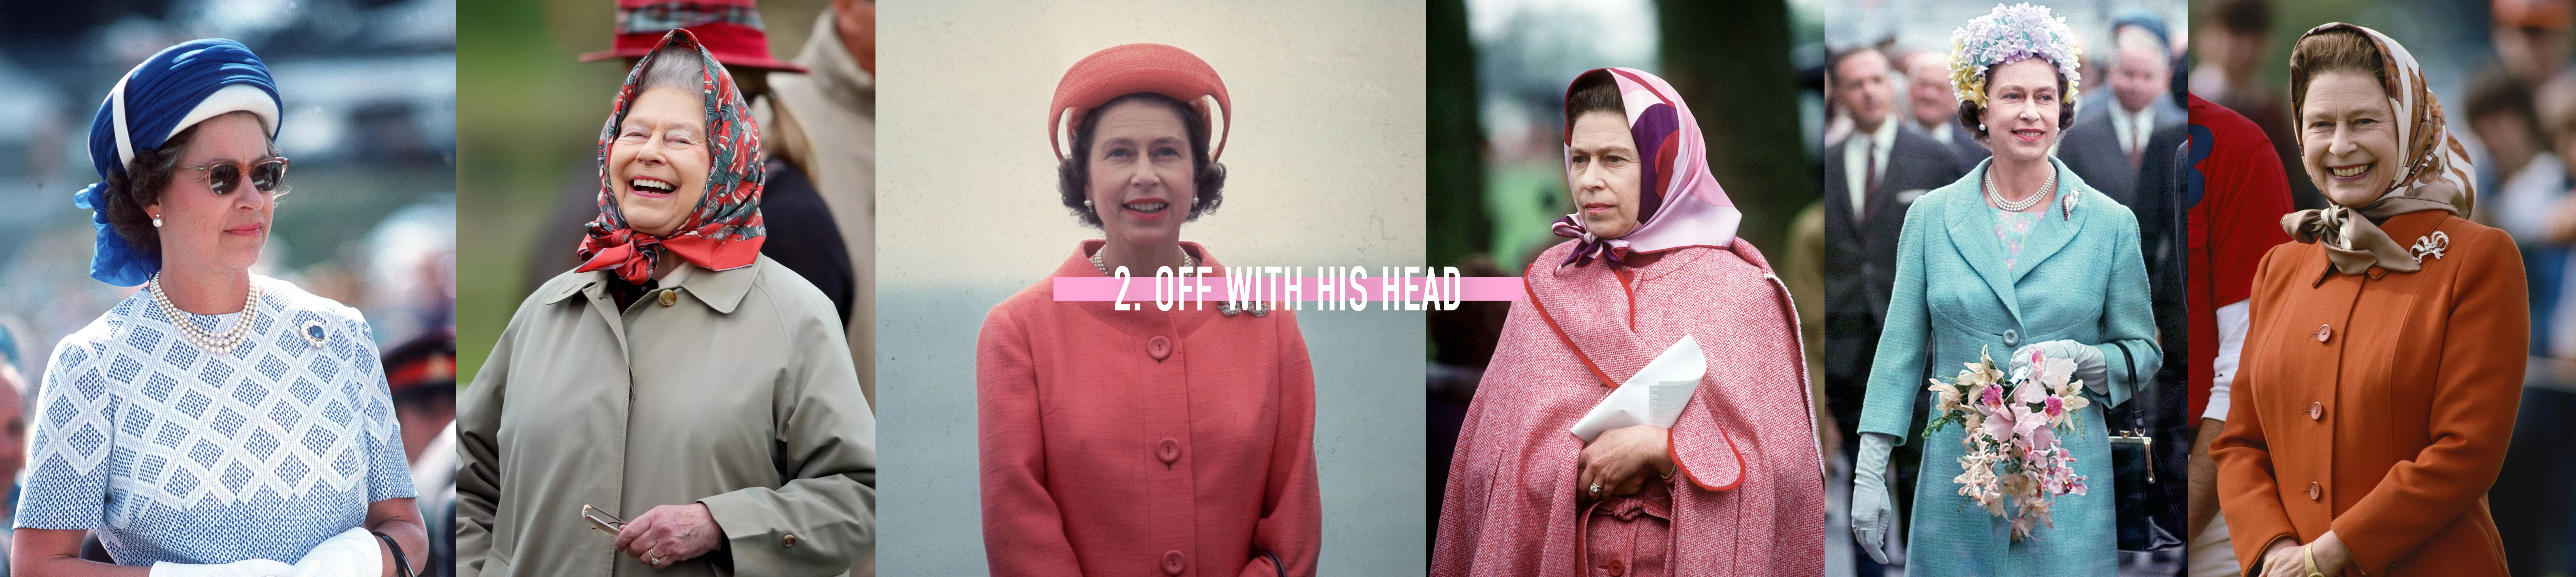 Queen Elizabeth II Platinum Jubilee Fashion 2022 Style Trends Accessories Hats, Scarves, Hermes, Crown